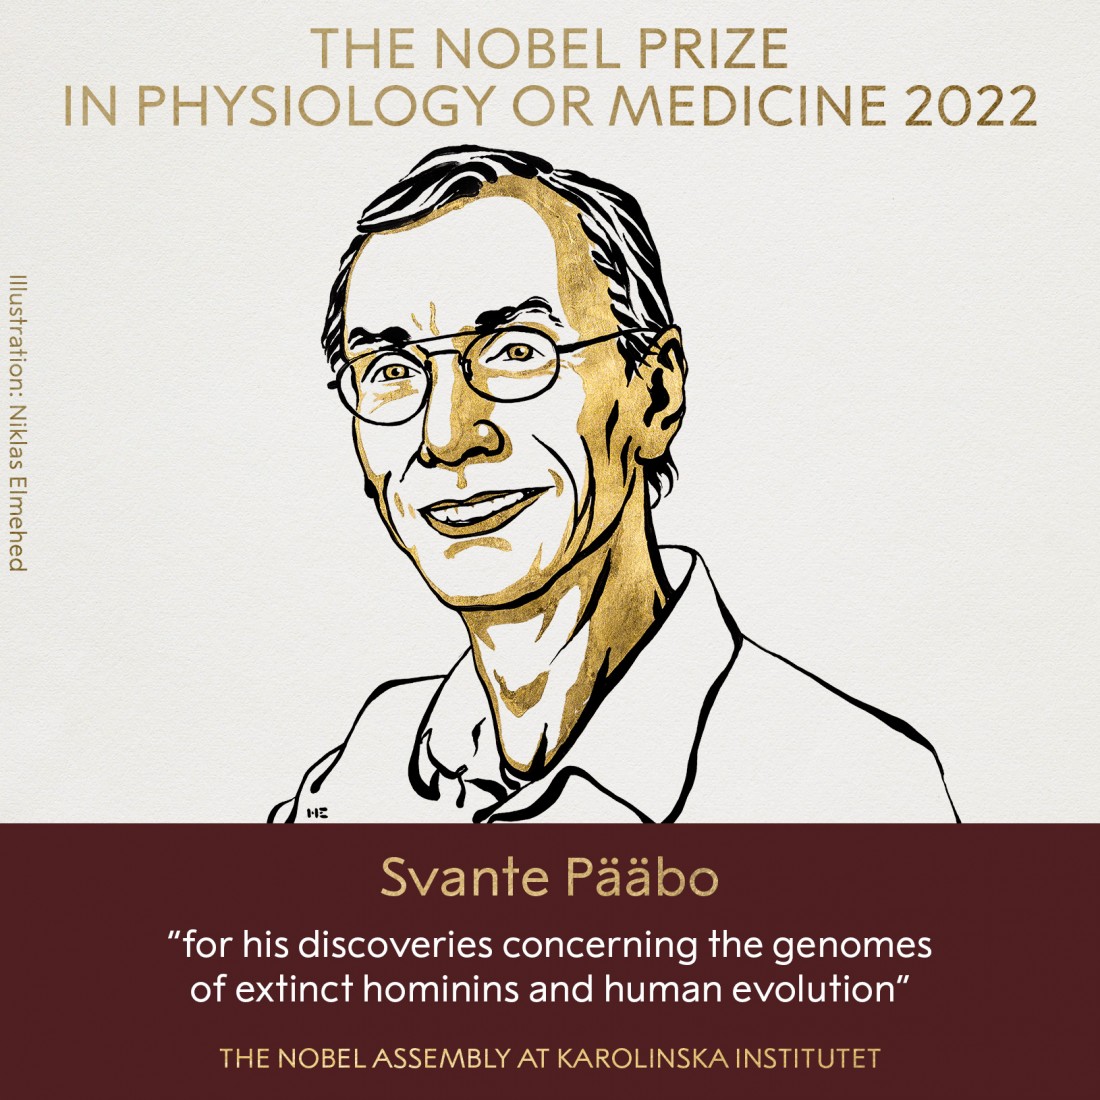 Chủ nhân giải Nobel Y sinh 2022 Svante Pääbo. Ảnh: NobelPrize